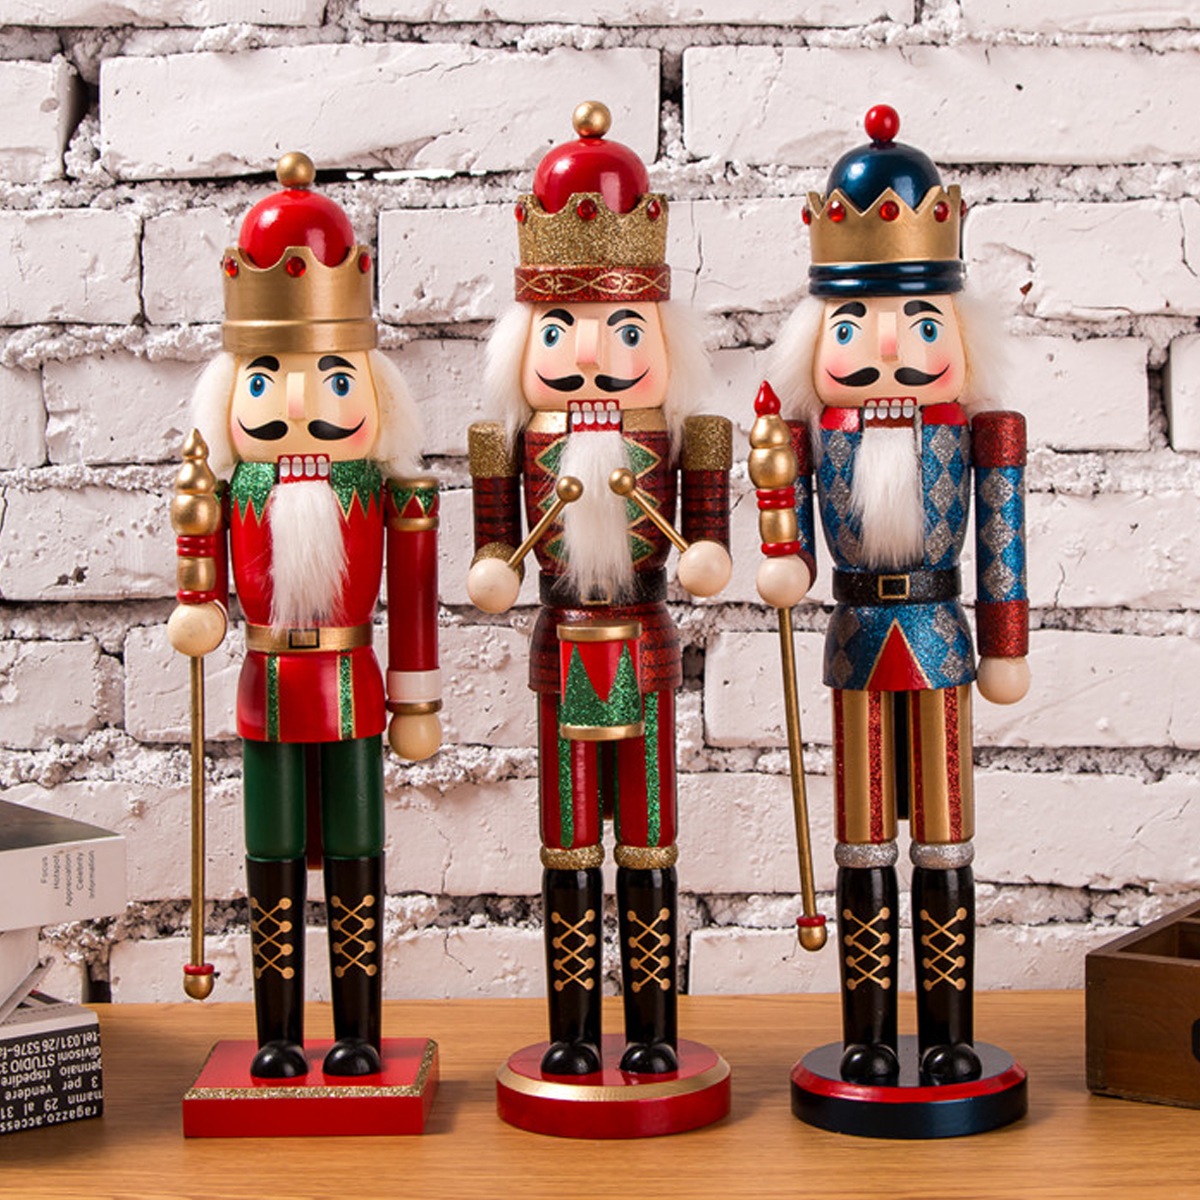 38cm-Wooden-Nutcracker-Doll-Soldier-Vintage-Handcraft-Decoration-Christmas-Gifts-1394894-2